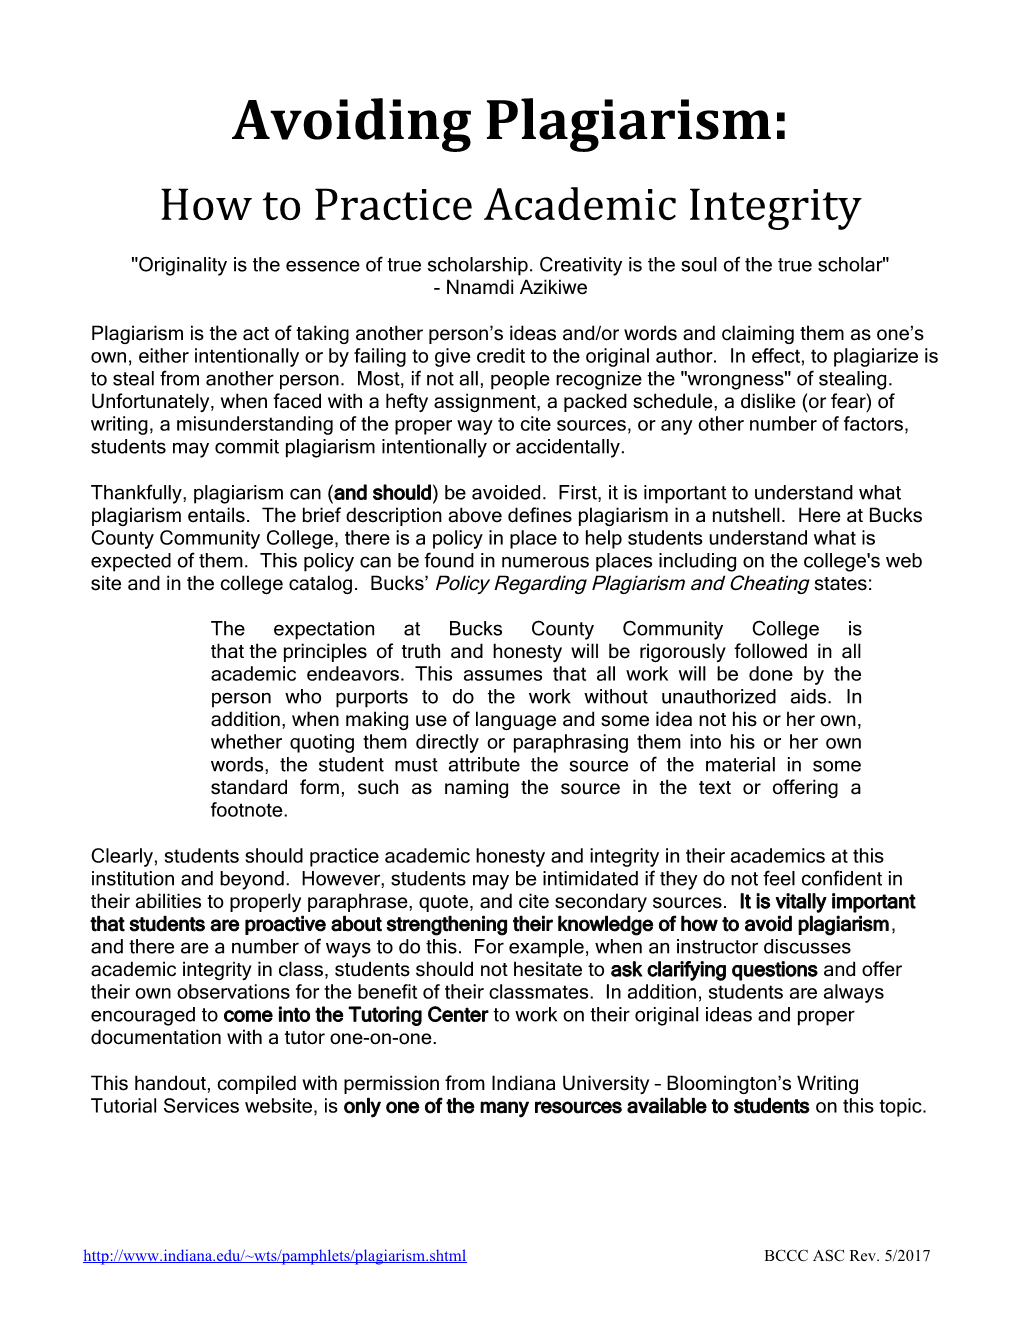 How to Practice Academic Integrity